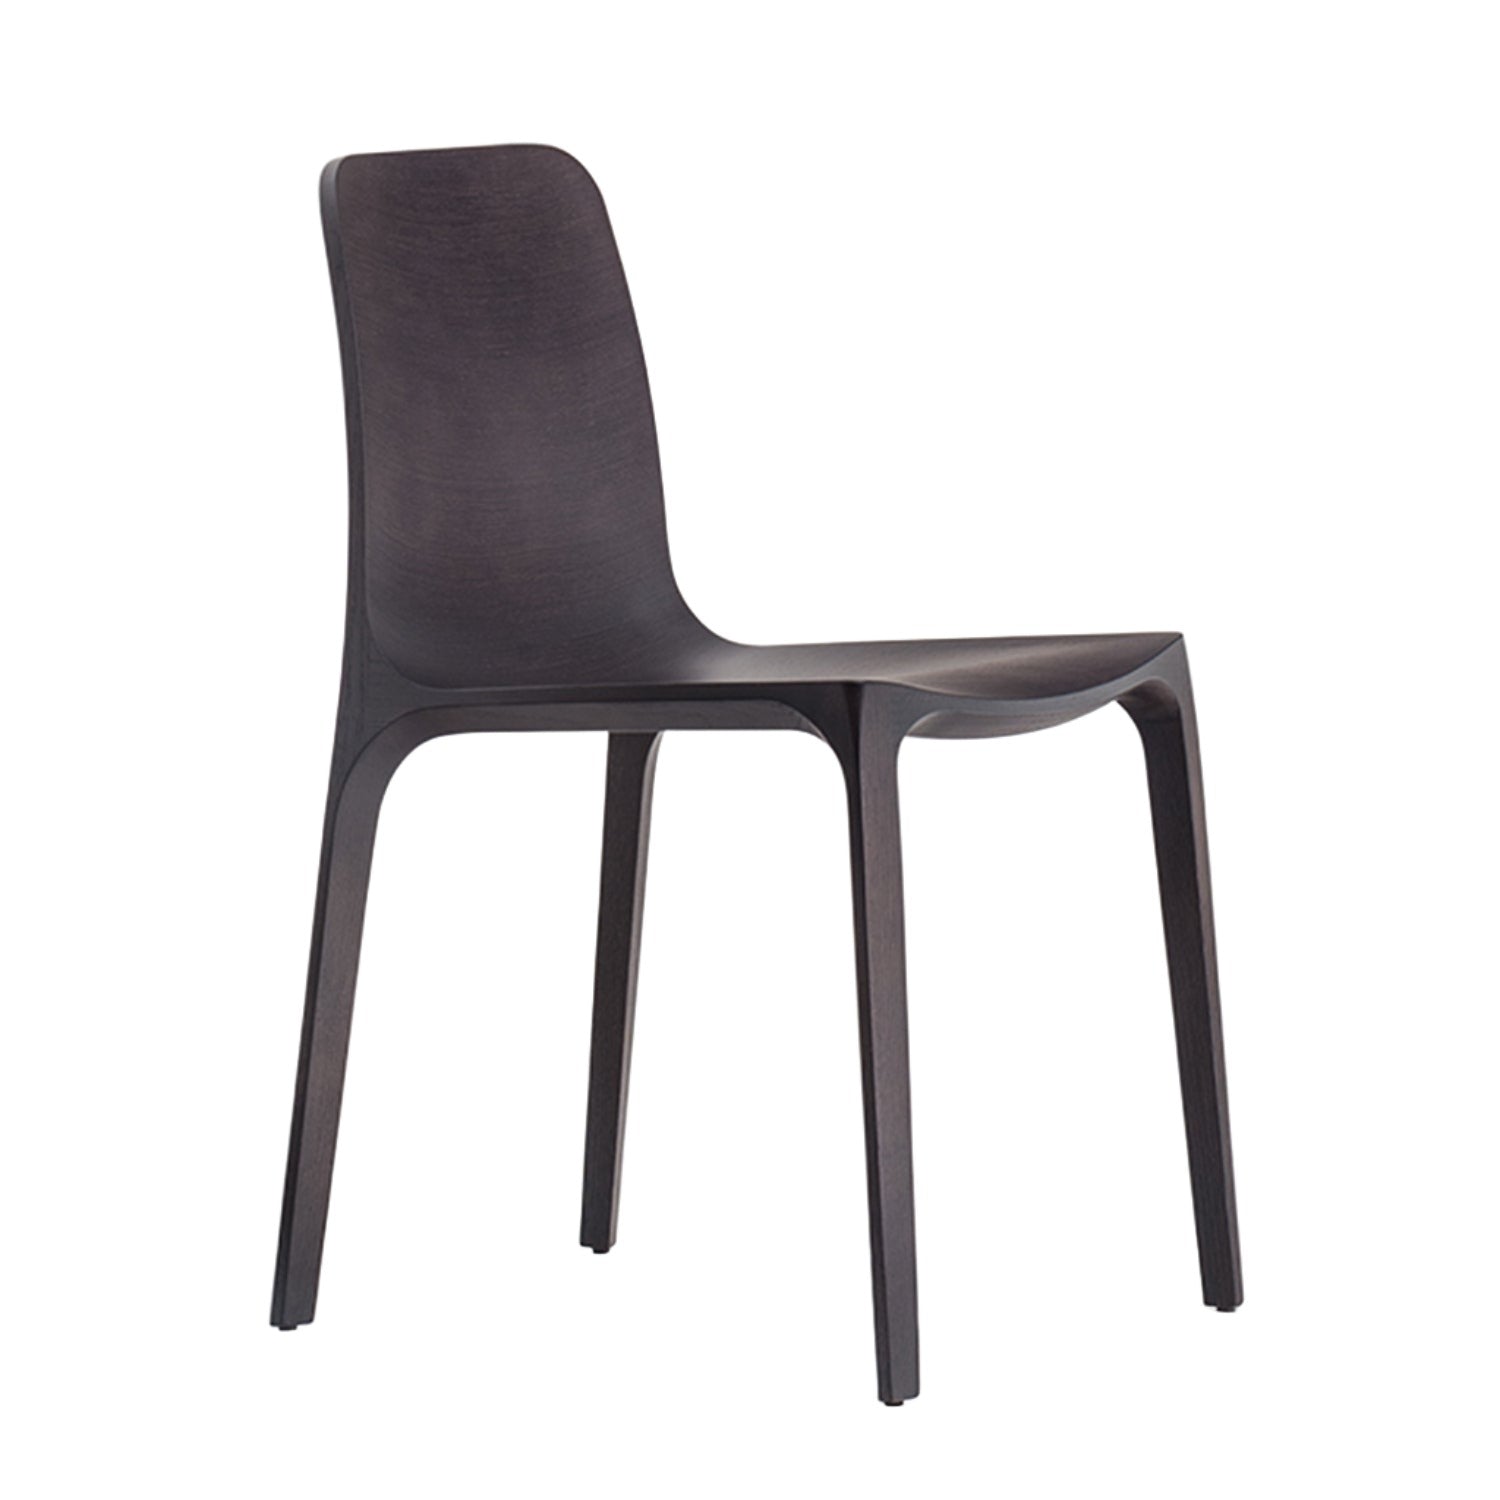 Pedrali Frida 752 Dining Chair in black